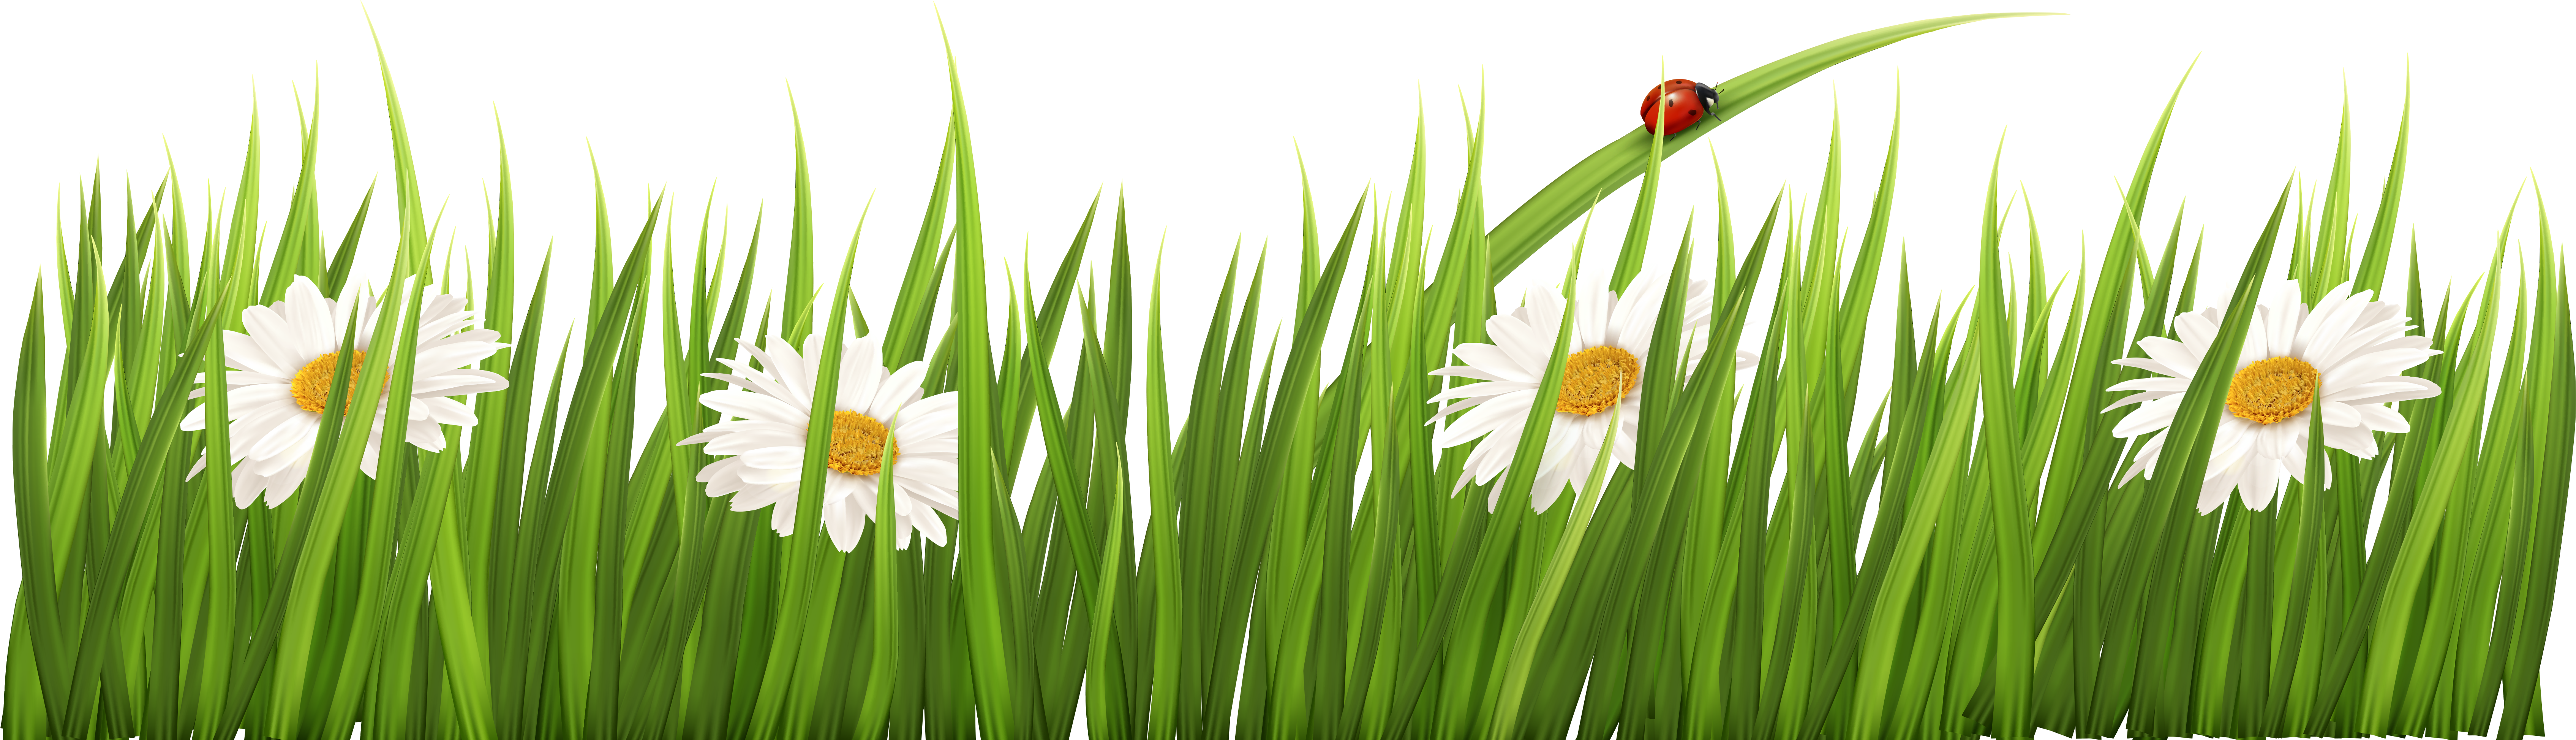 Полоска зеленой травы. Трава с цветами на прозрачном фоне. Травка на белом фоне. Травка с цветочками